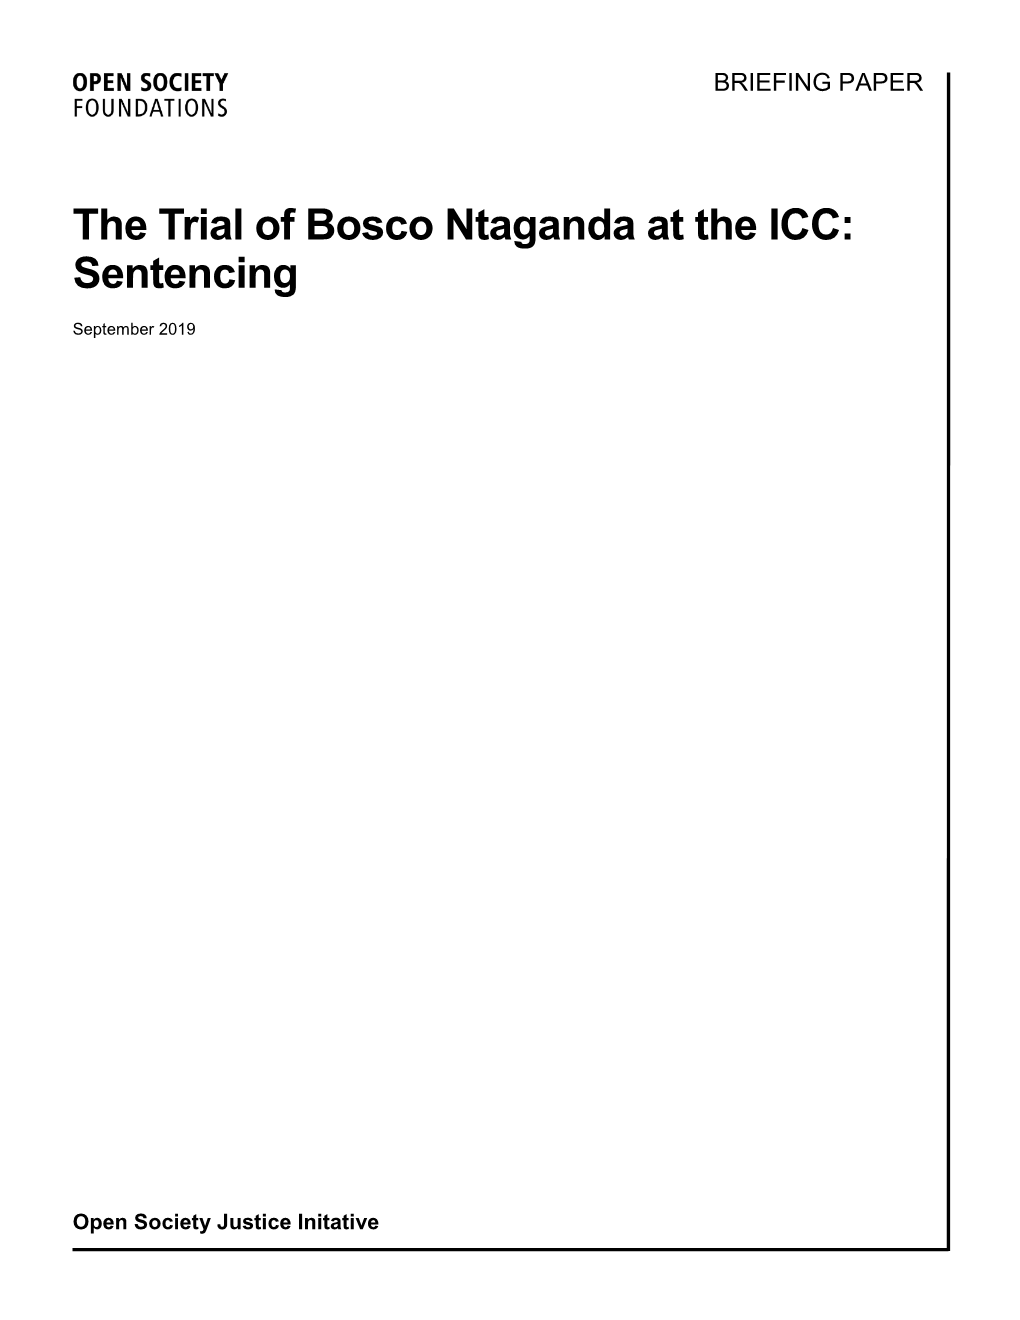 The Trial of Bosco Ntaganda at the ICC: Sentencing